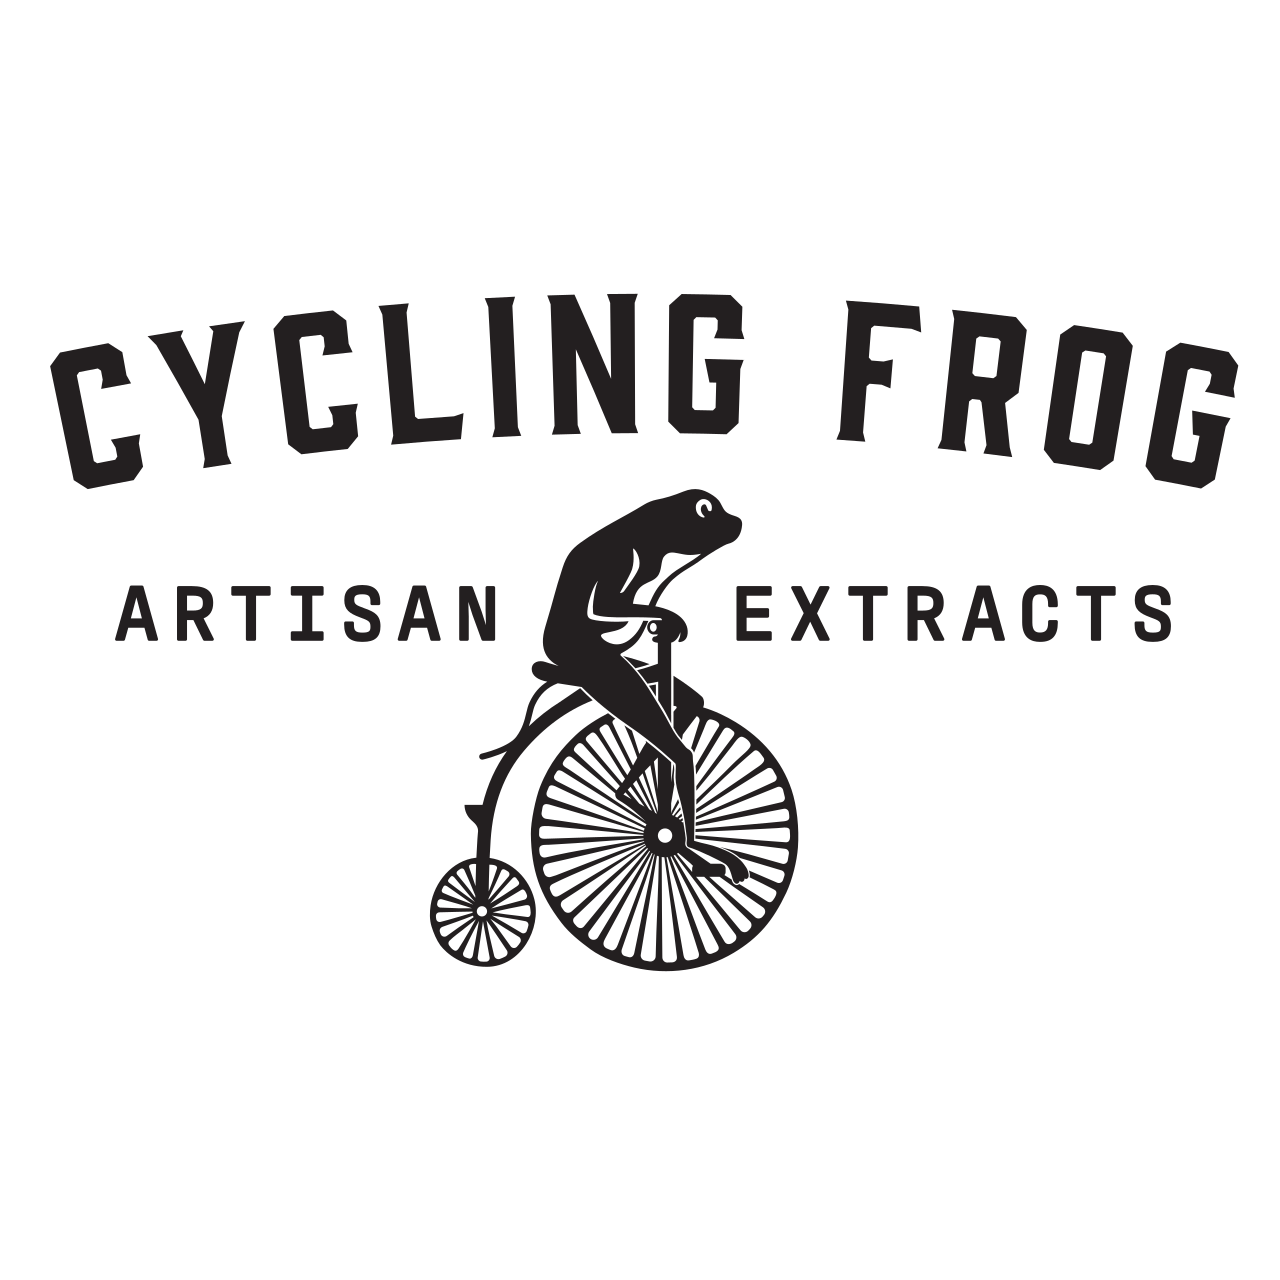 Cycling Frog Logo